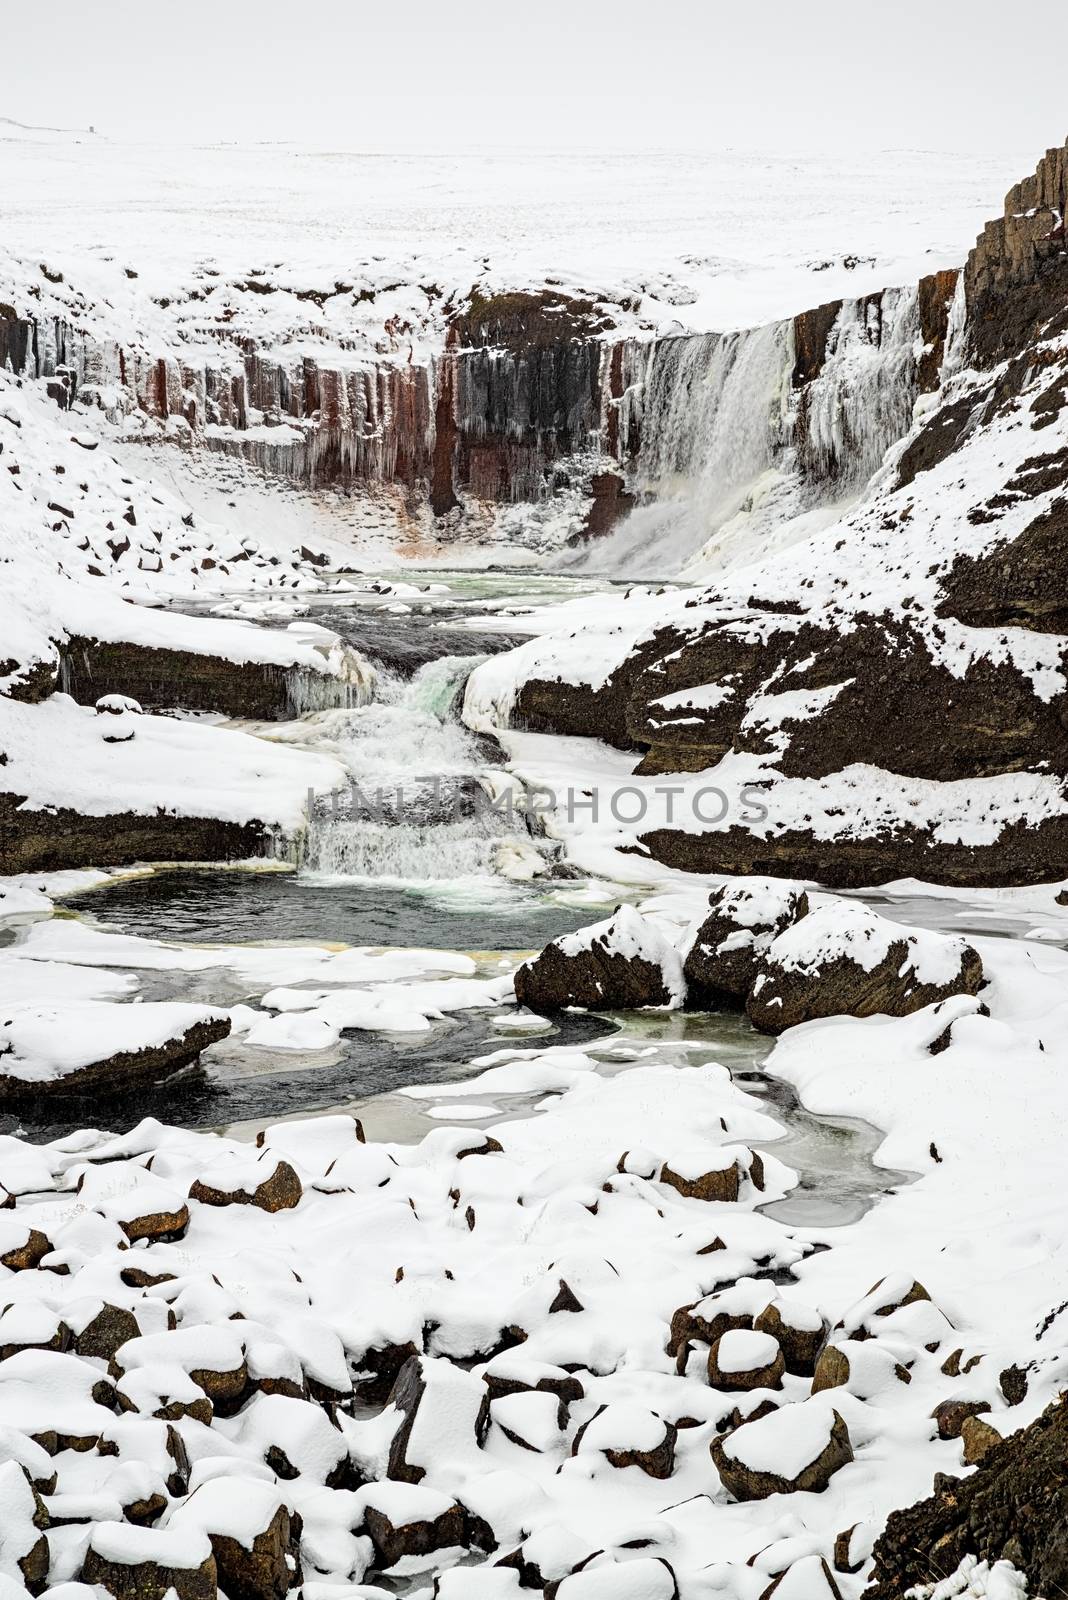 Snaedufoss waterfall, Iceland by LuigiMorbidelli